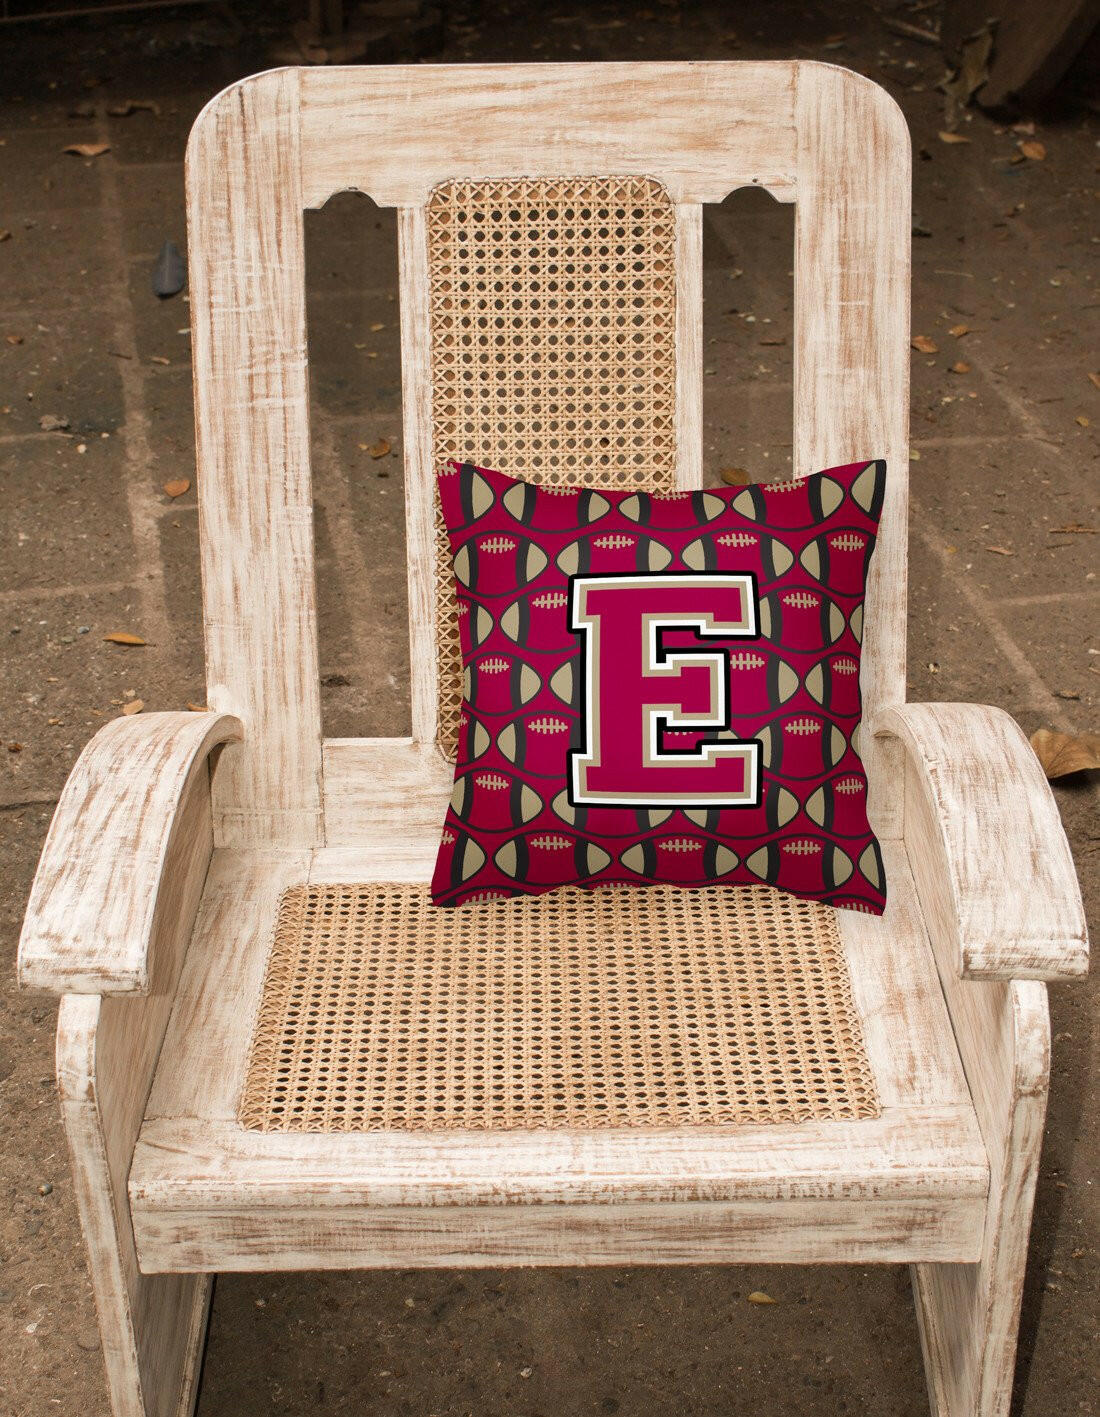 Letter E Football Garnet and Gold Fabric Decorative Pillow CJ1078-EPW1414 by Caroline's Treasures